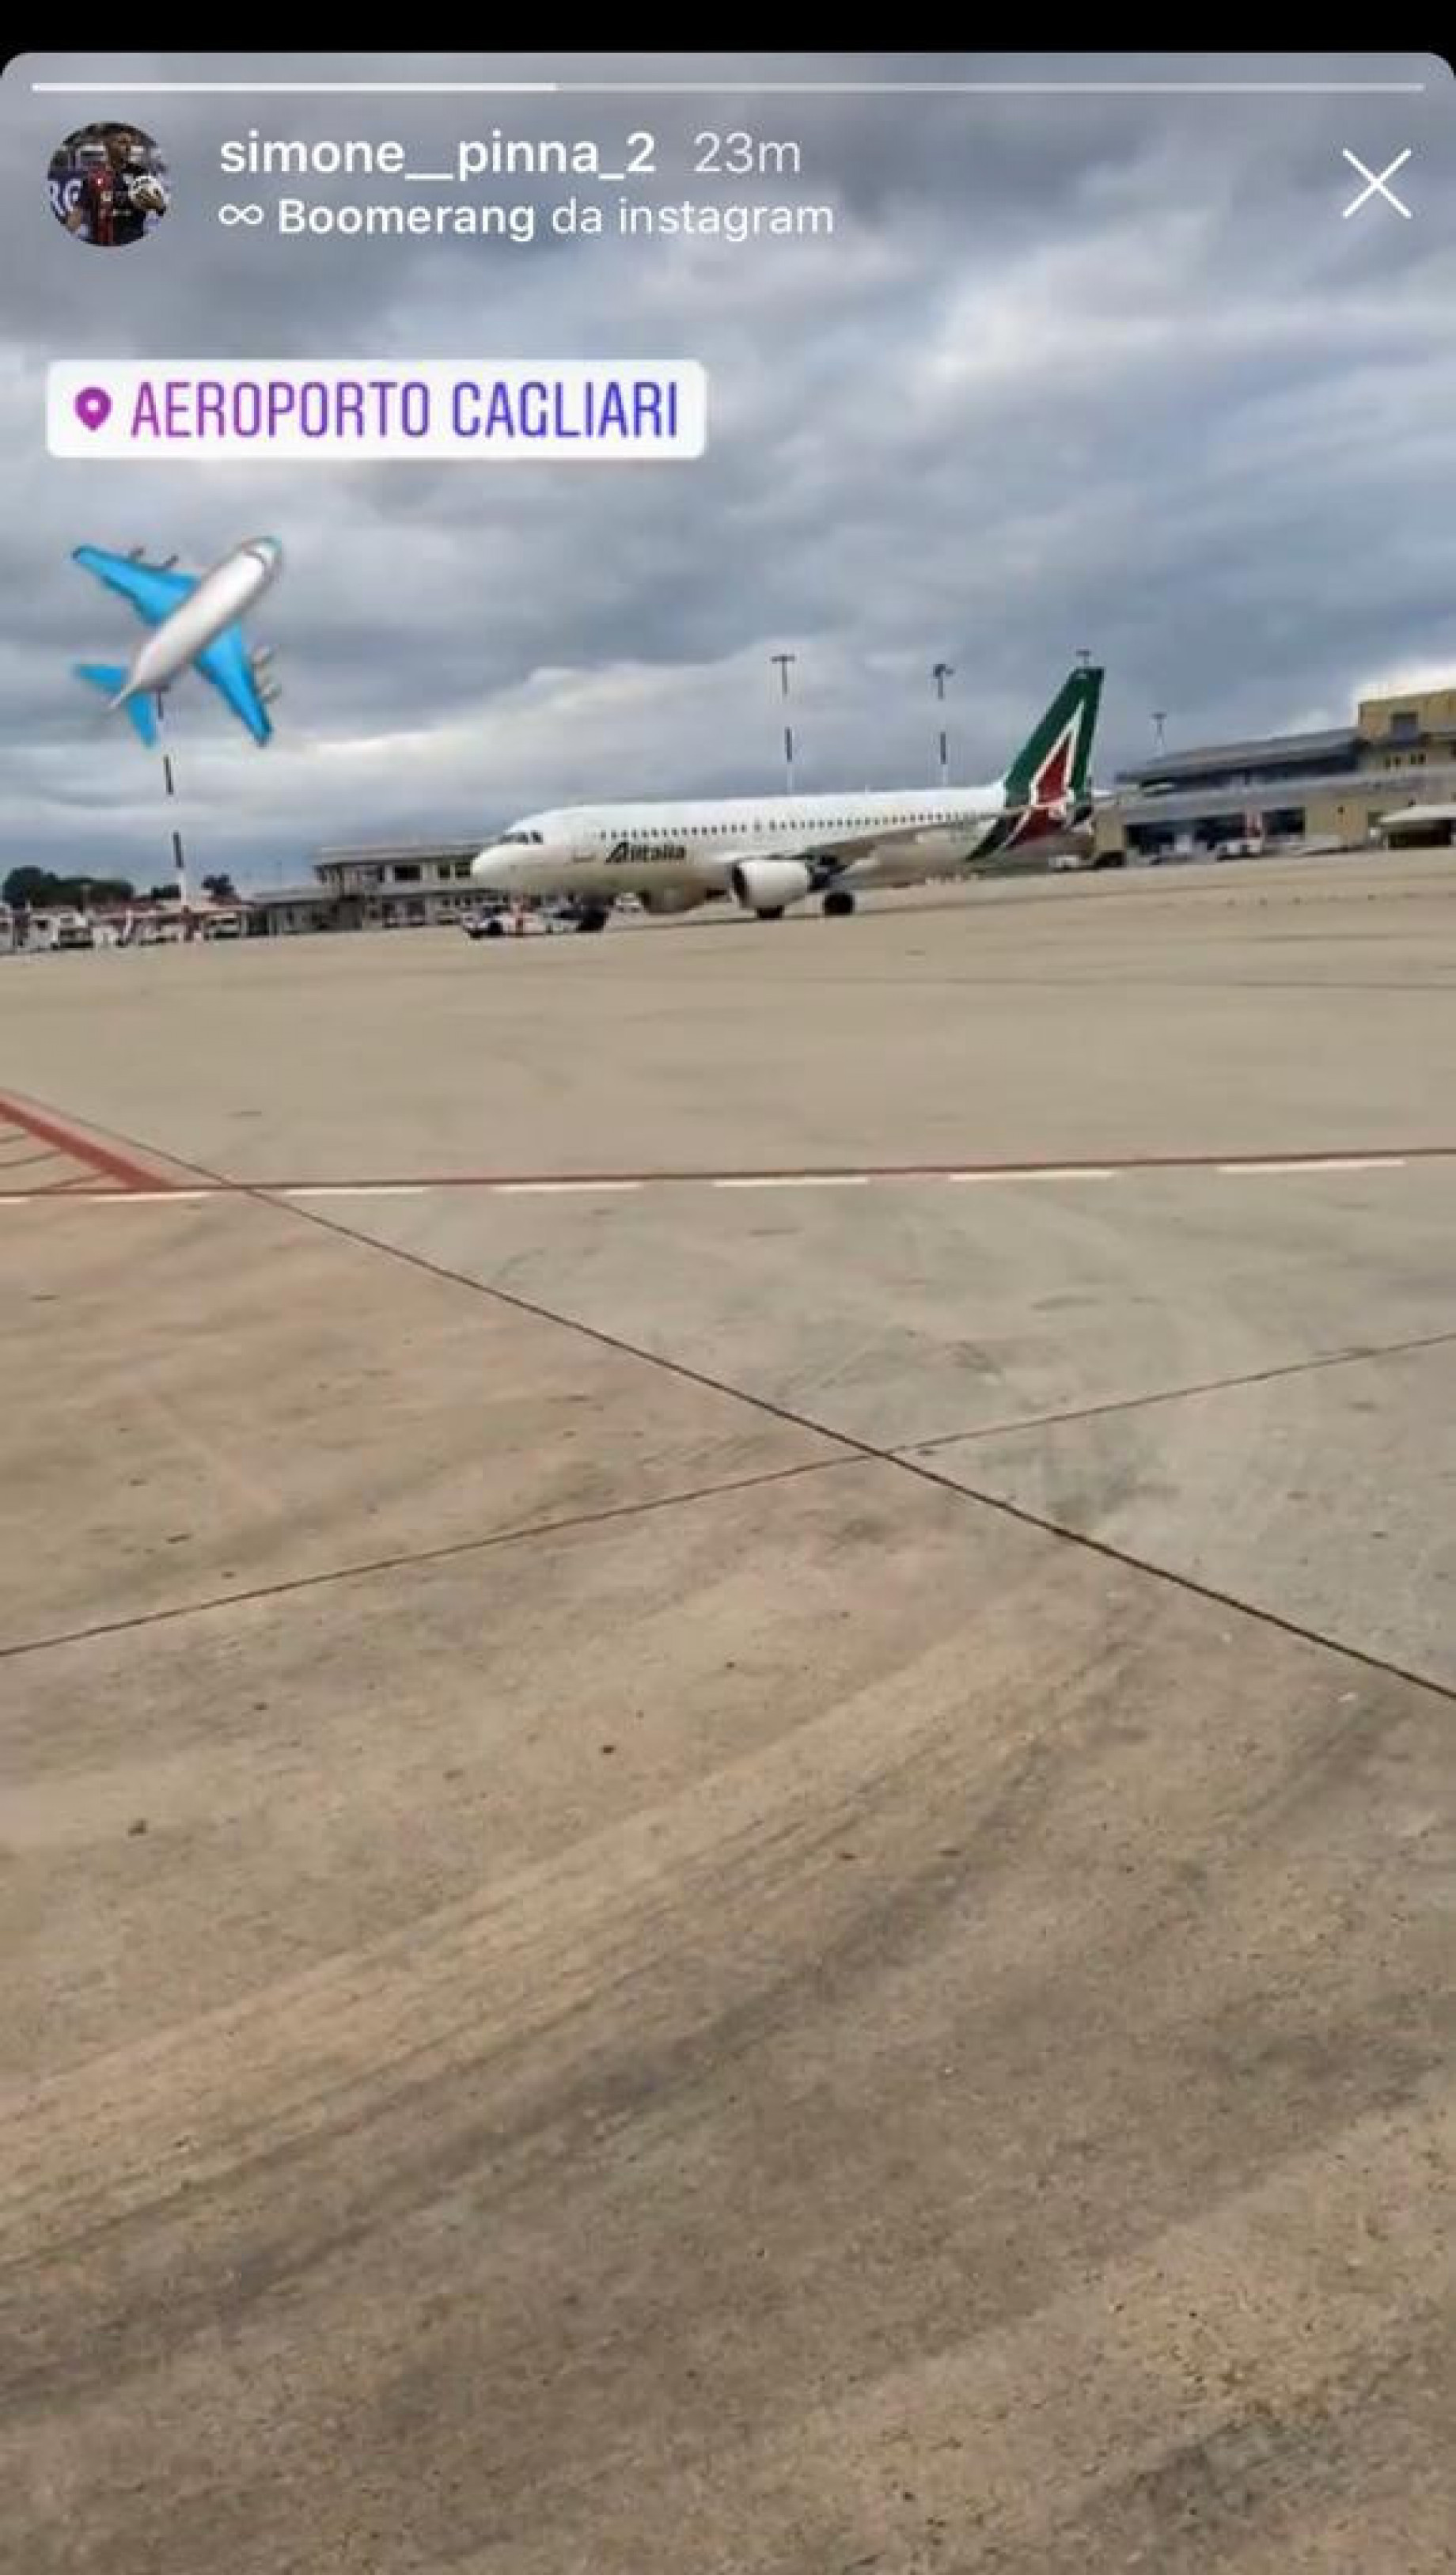 Pinna partenza Empoli Instagram_screenshot